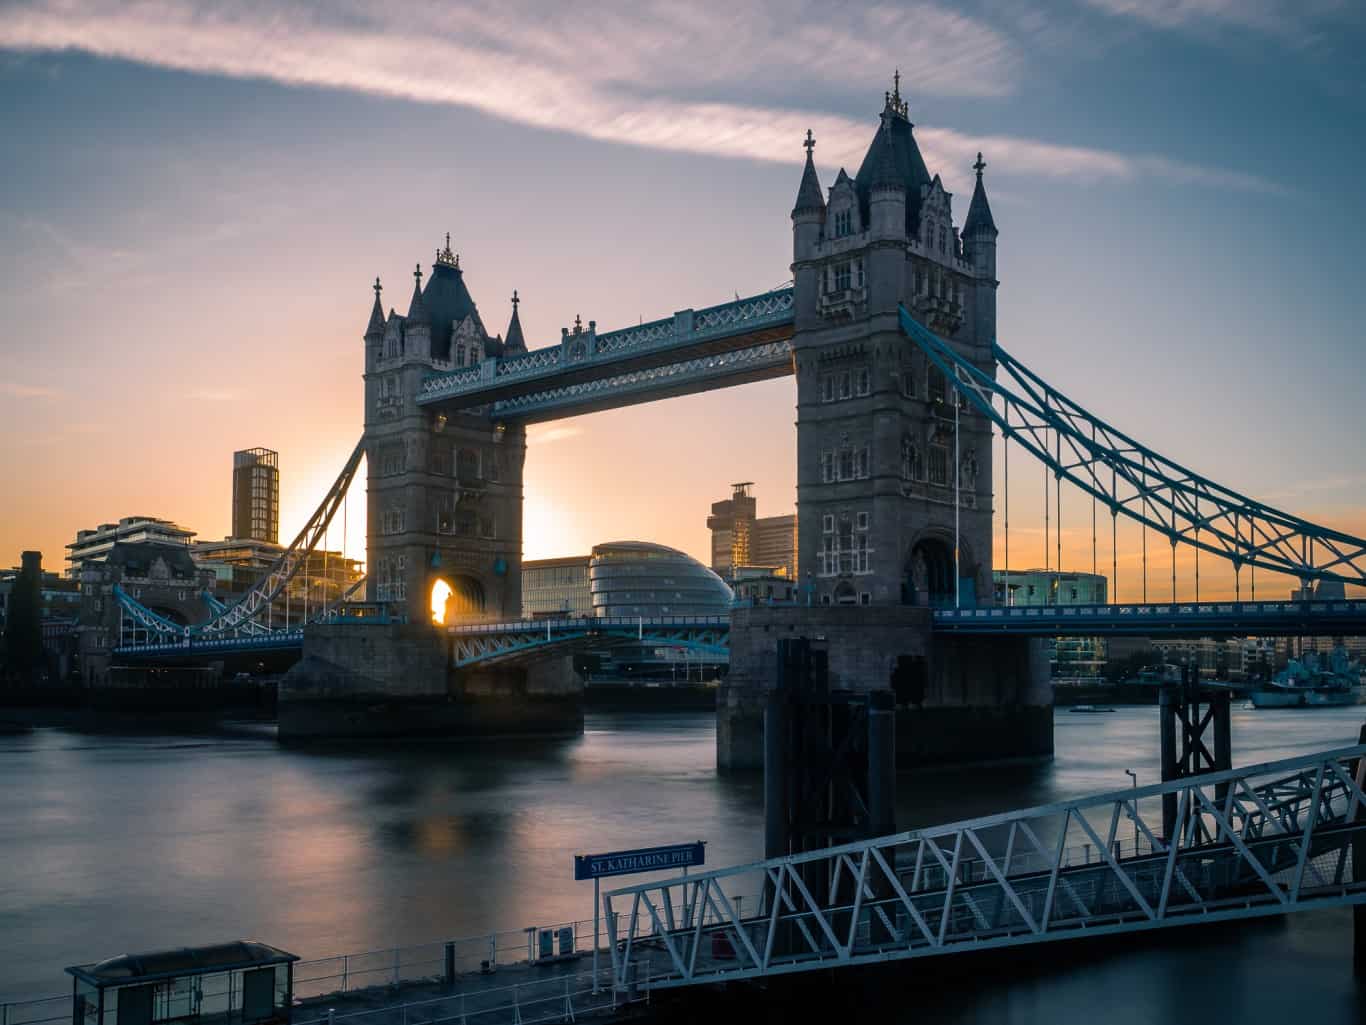 London+United+Kingdom | Tower bridge - London, United Kingdom - Travel photography